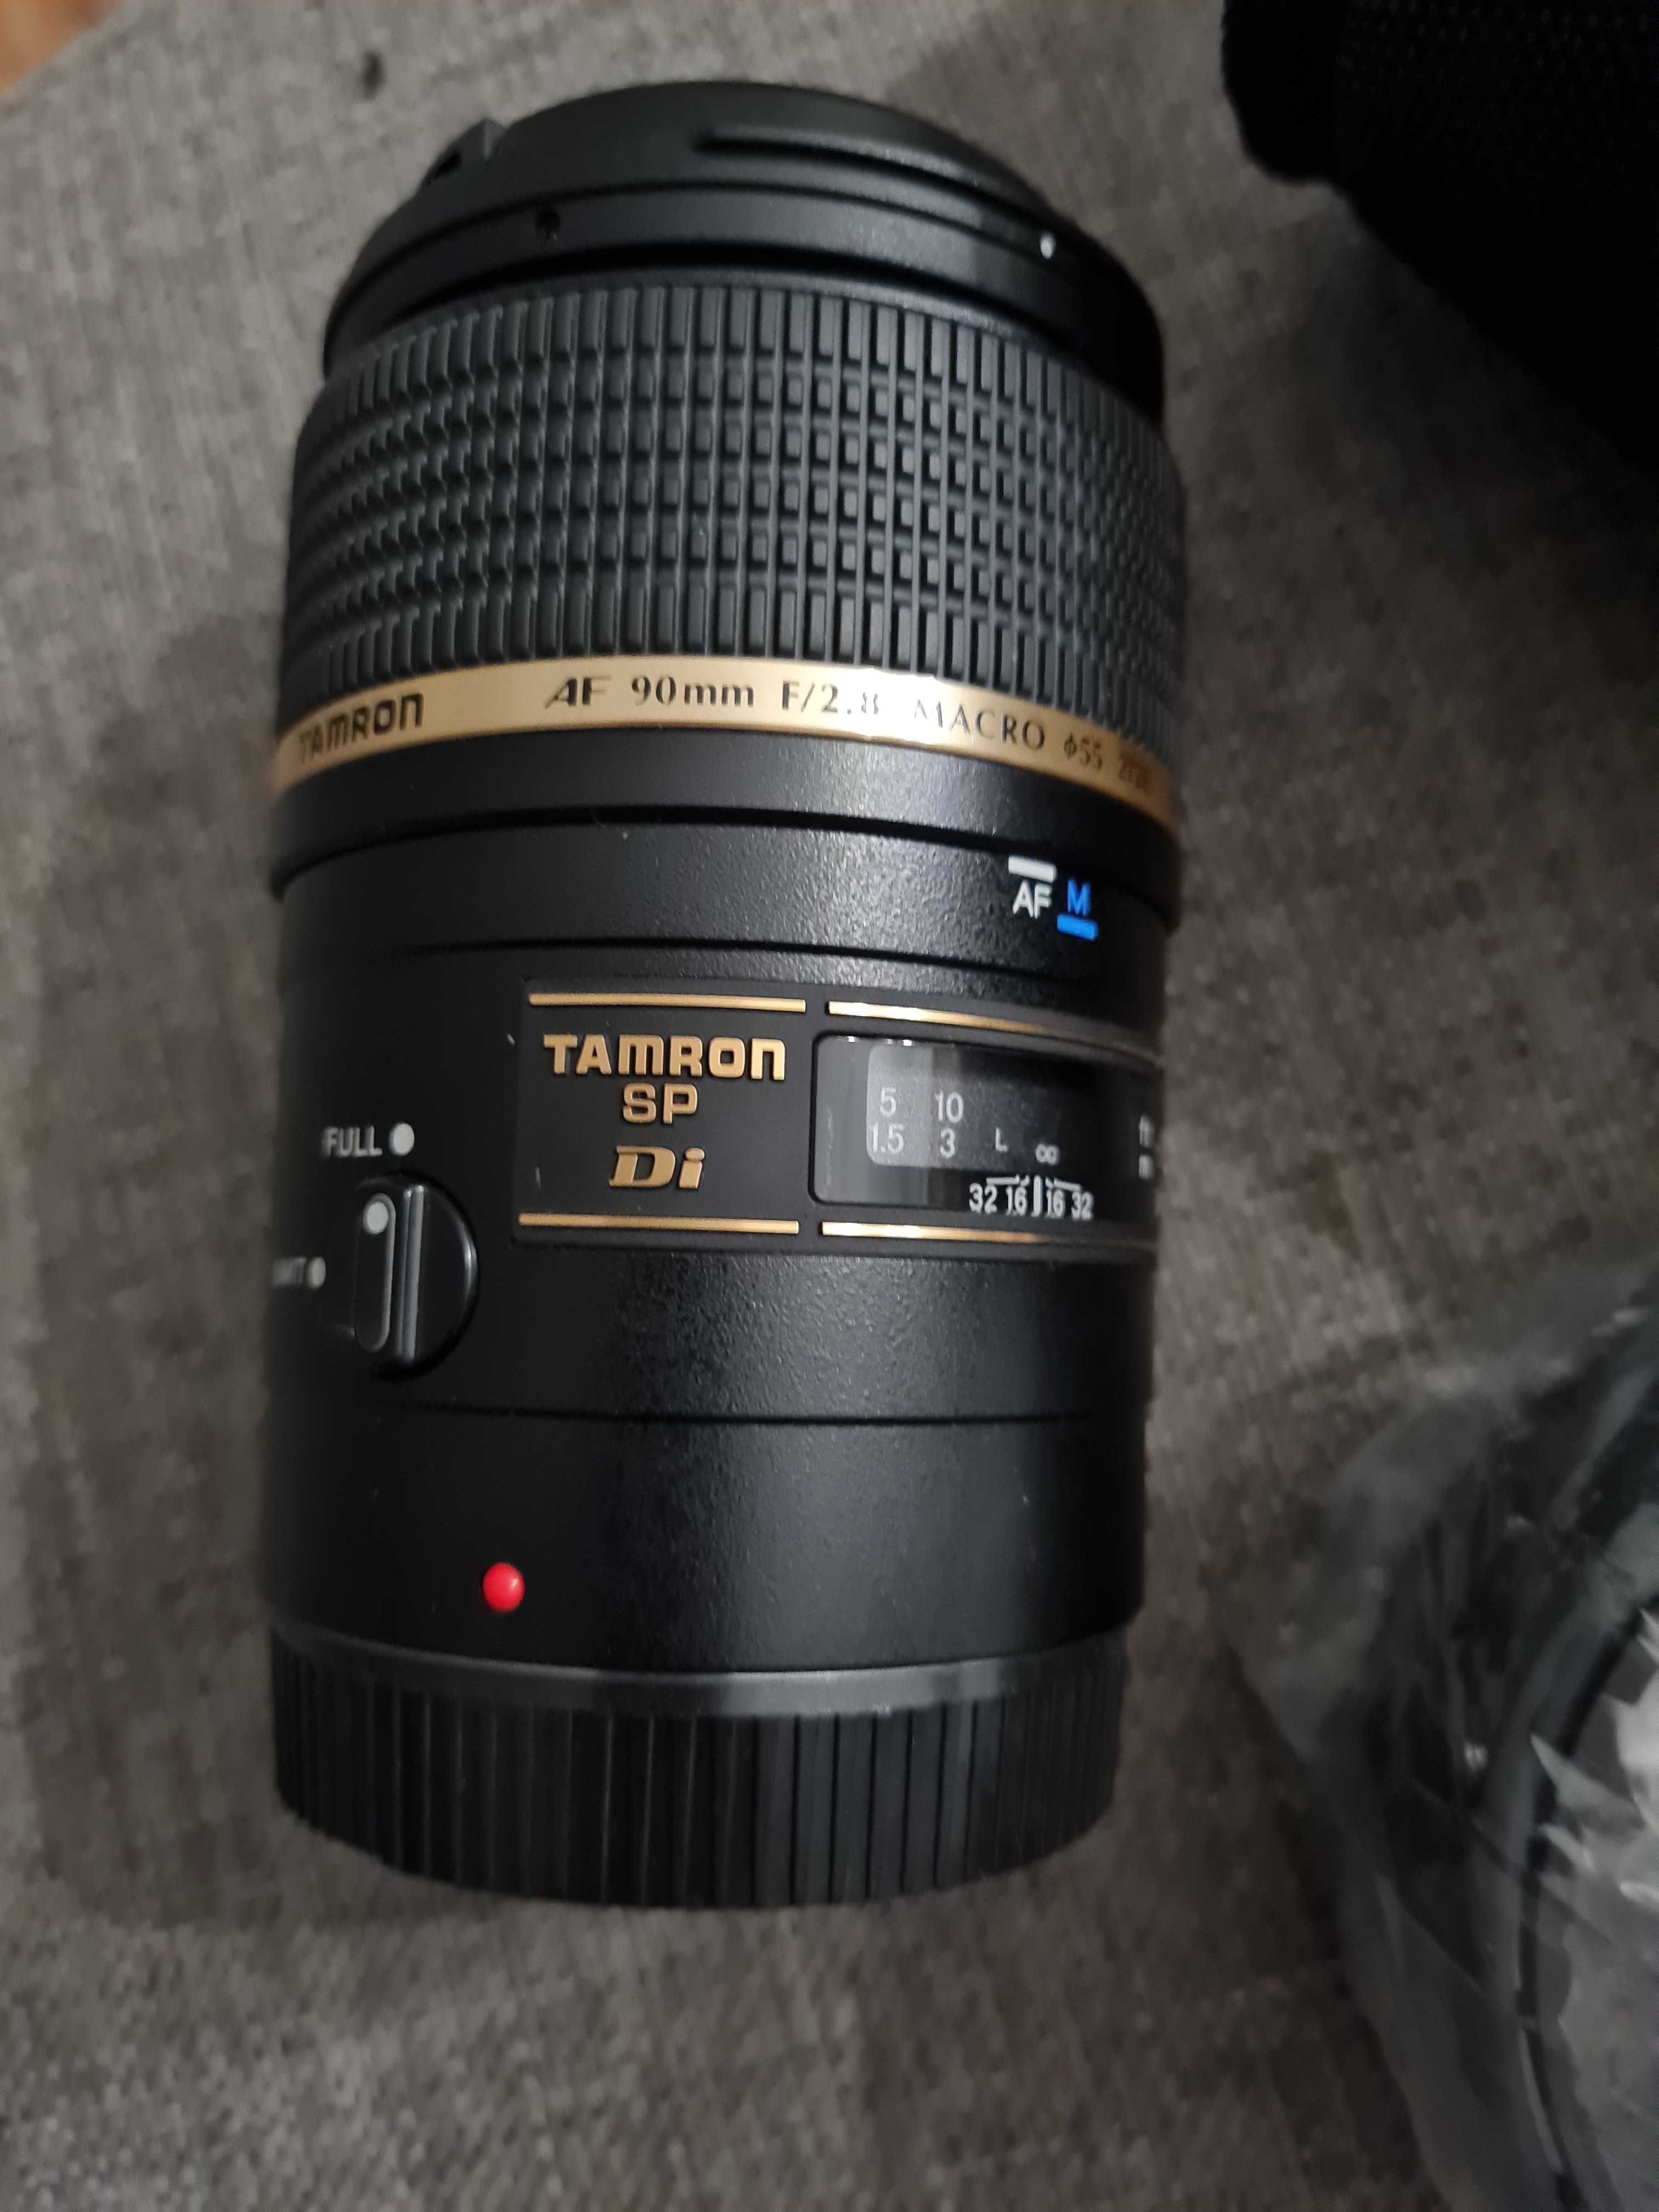 Obiektyw Tamron SP Di AF 90mm do Canona, fv